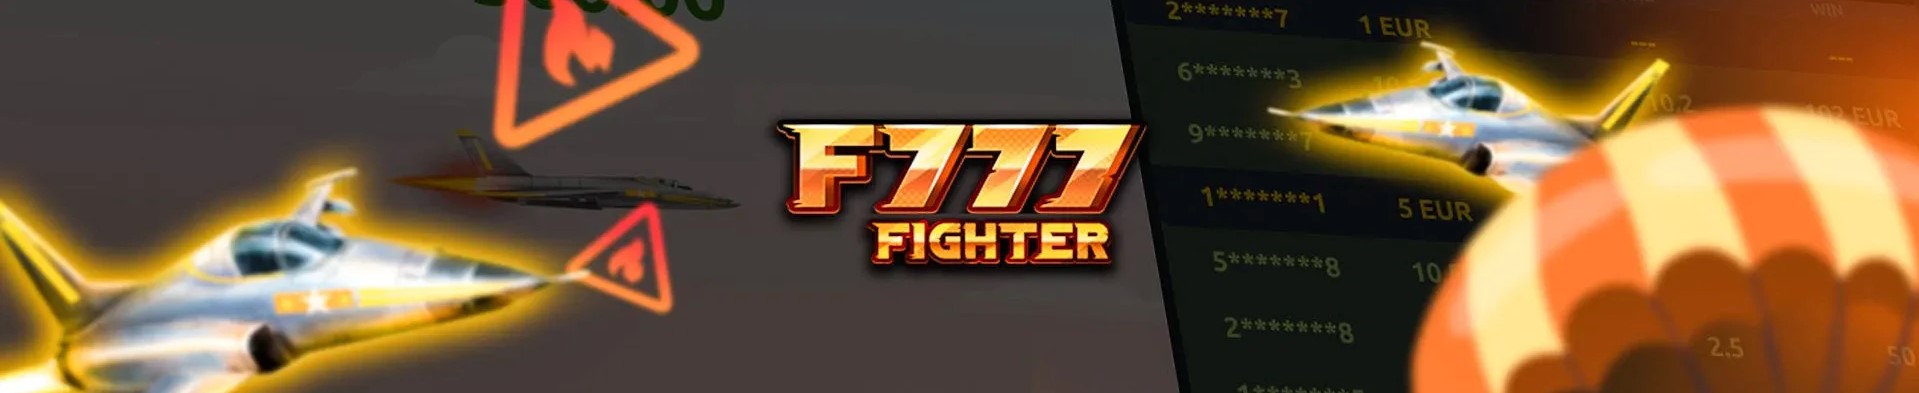 F777 fighter o'yin.